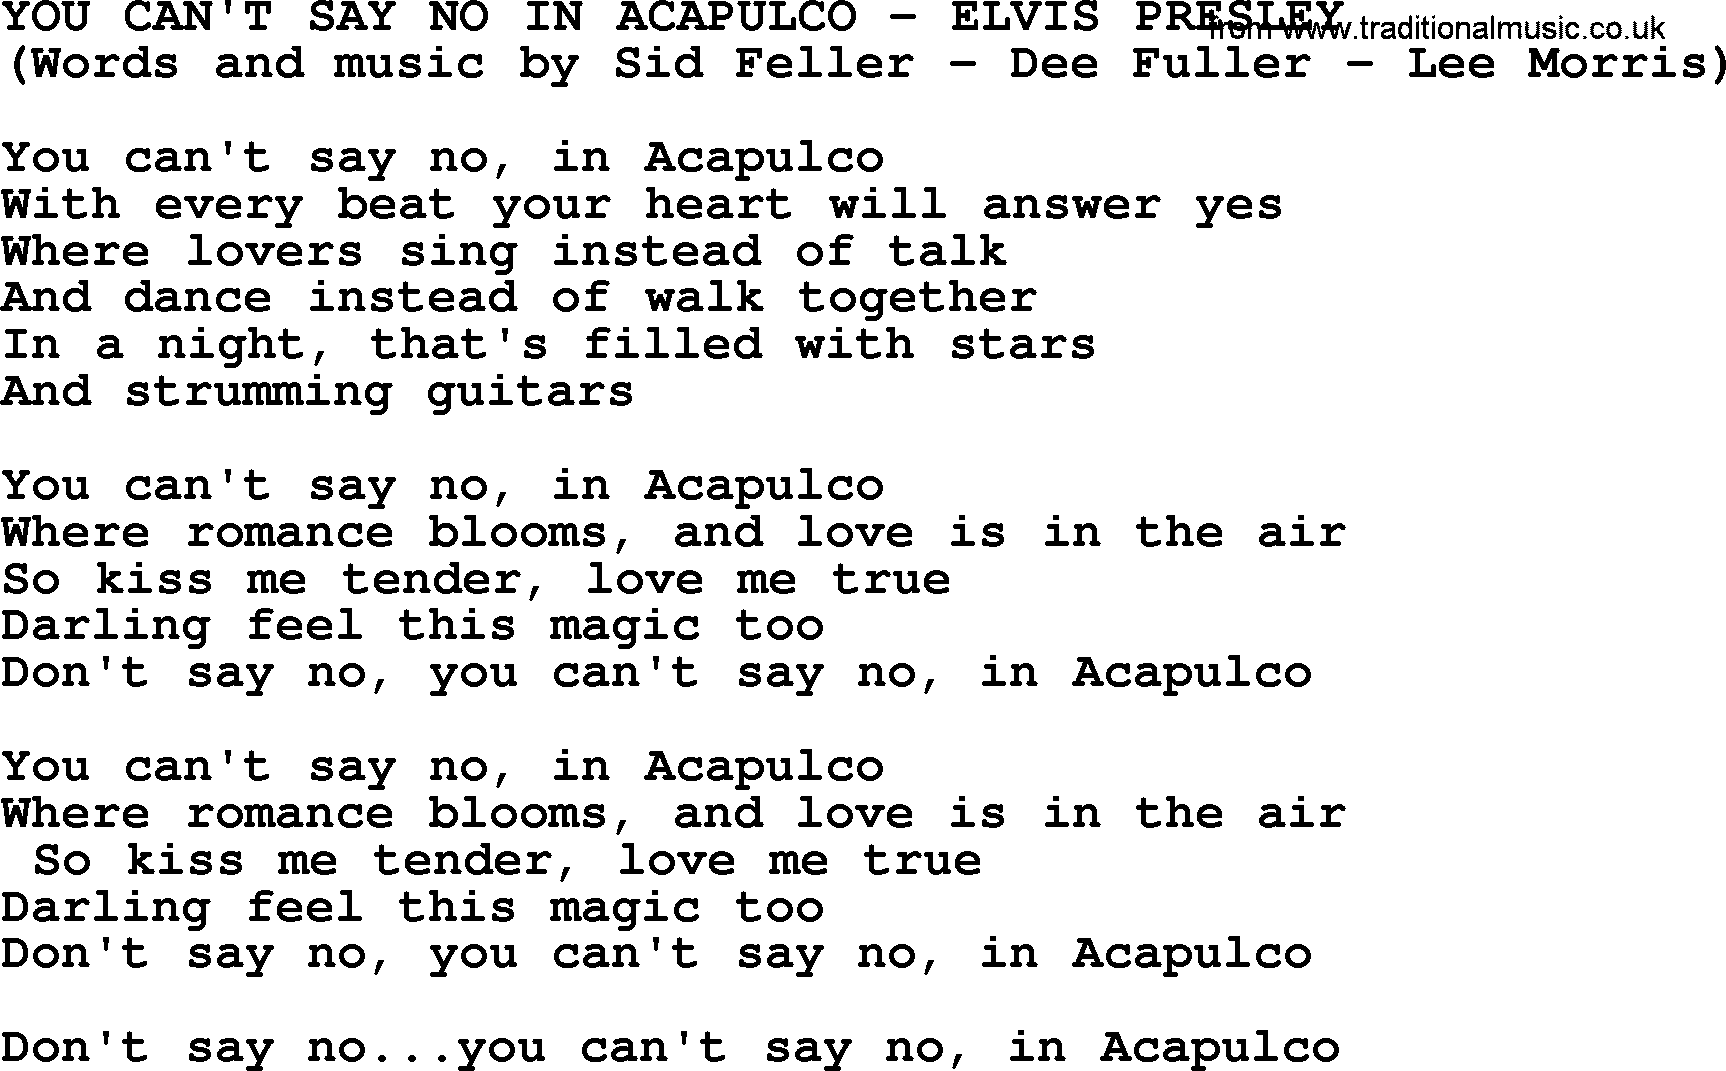 Elvis Presley song: You Can't Say No In Acapulco lyrics